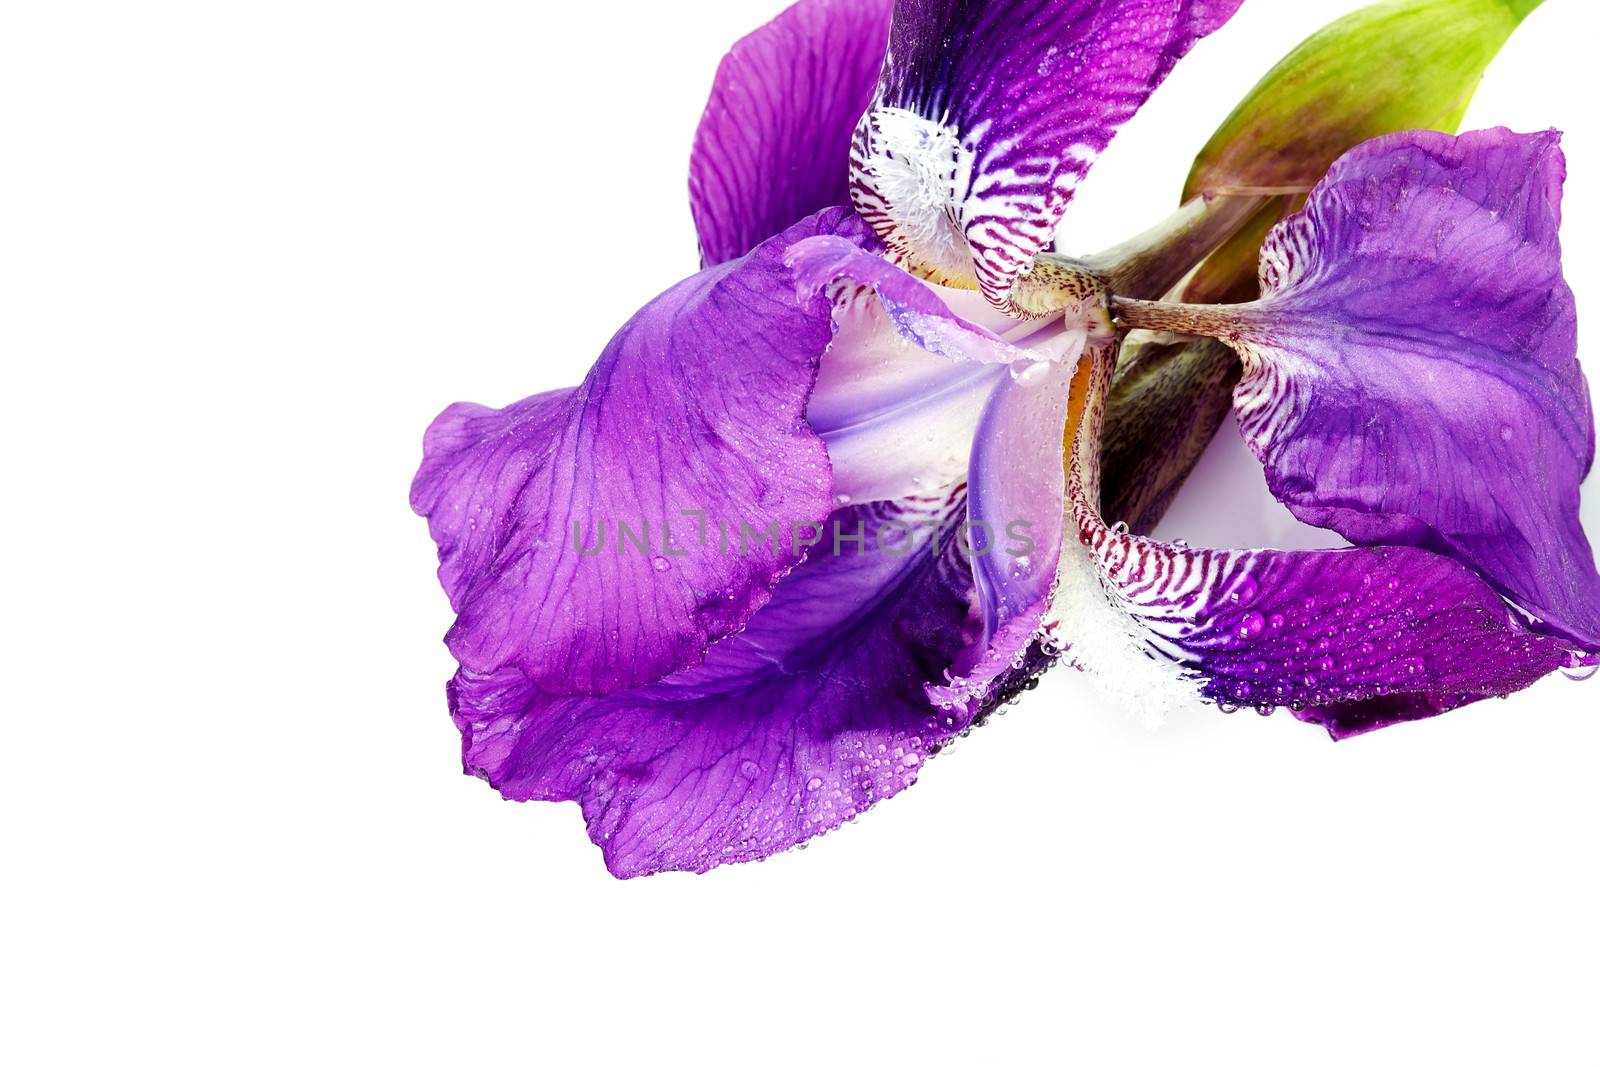 Violet flower.Violet iris. Flower in dew drops.